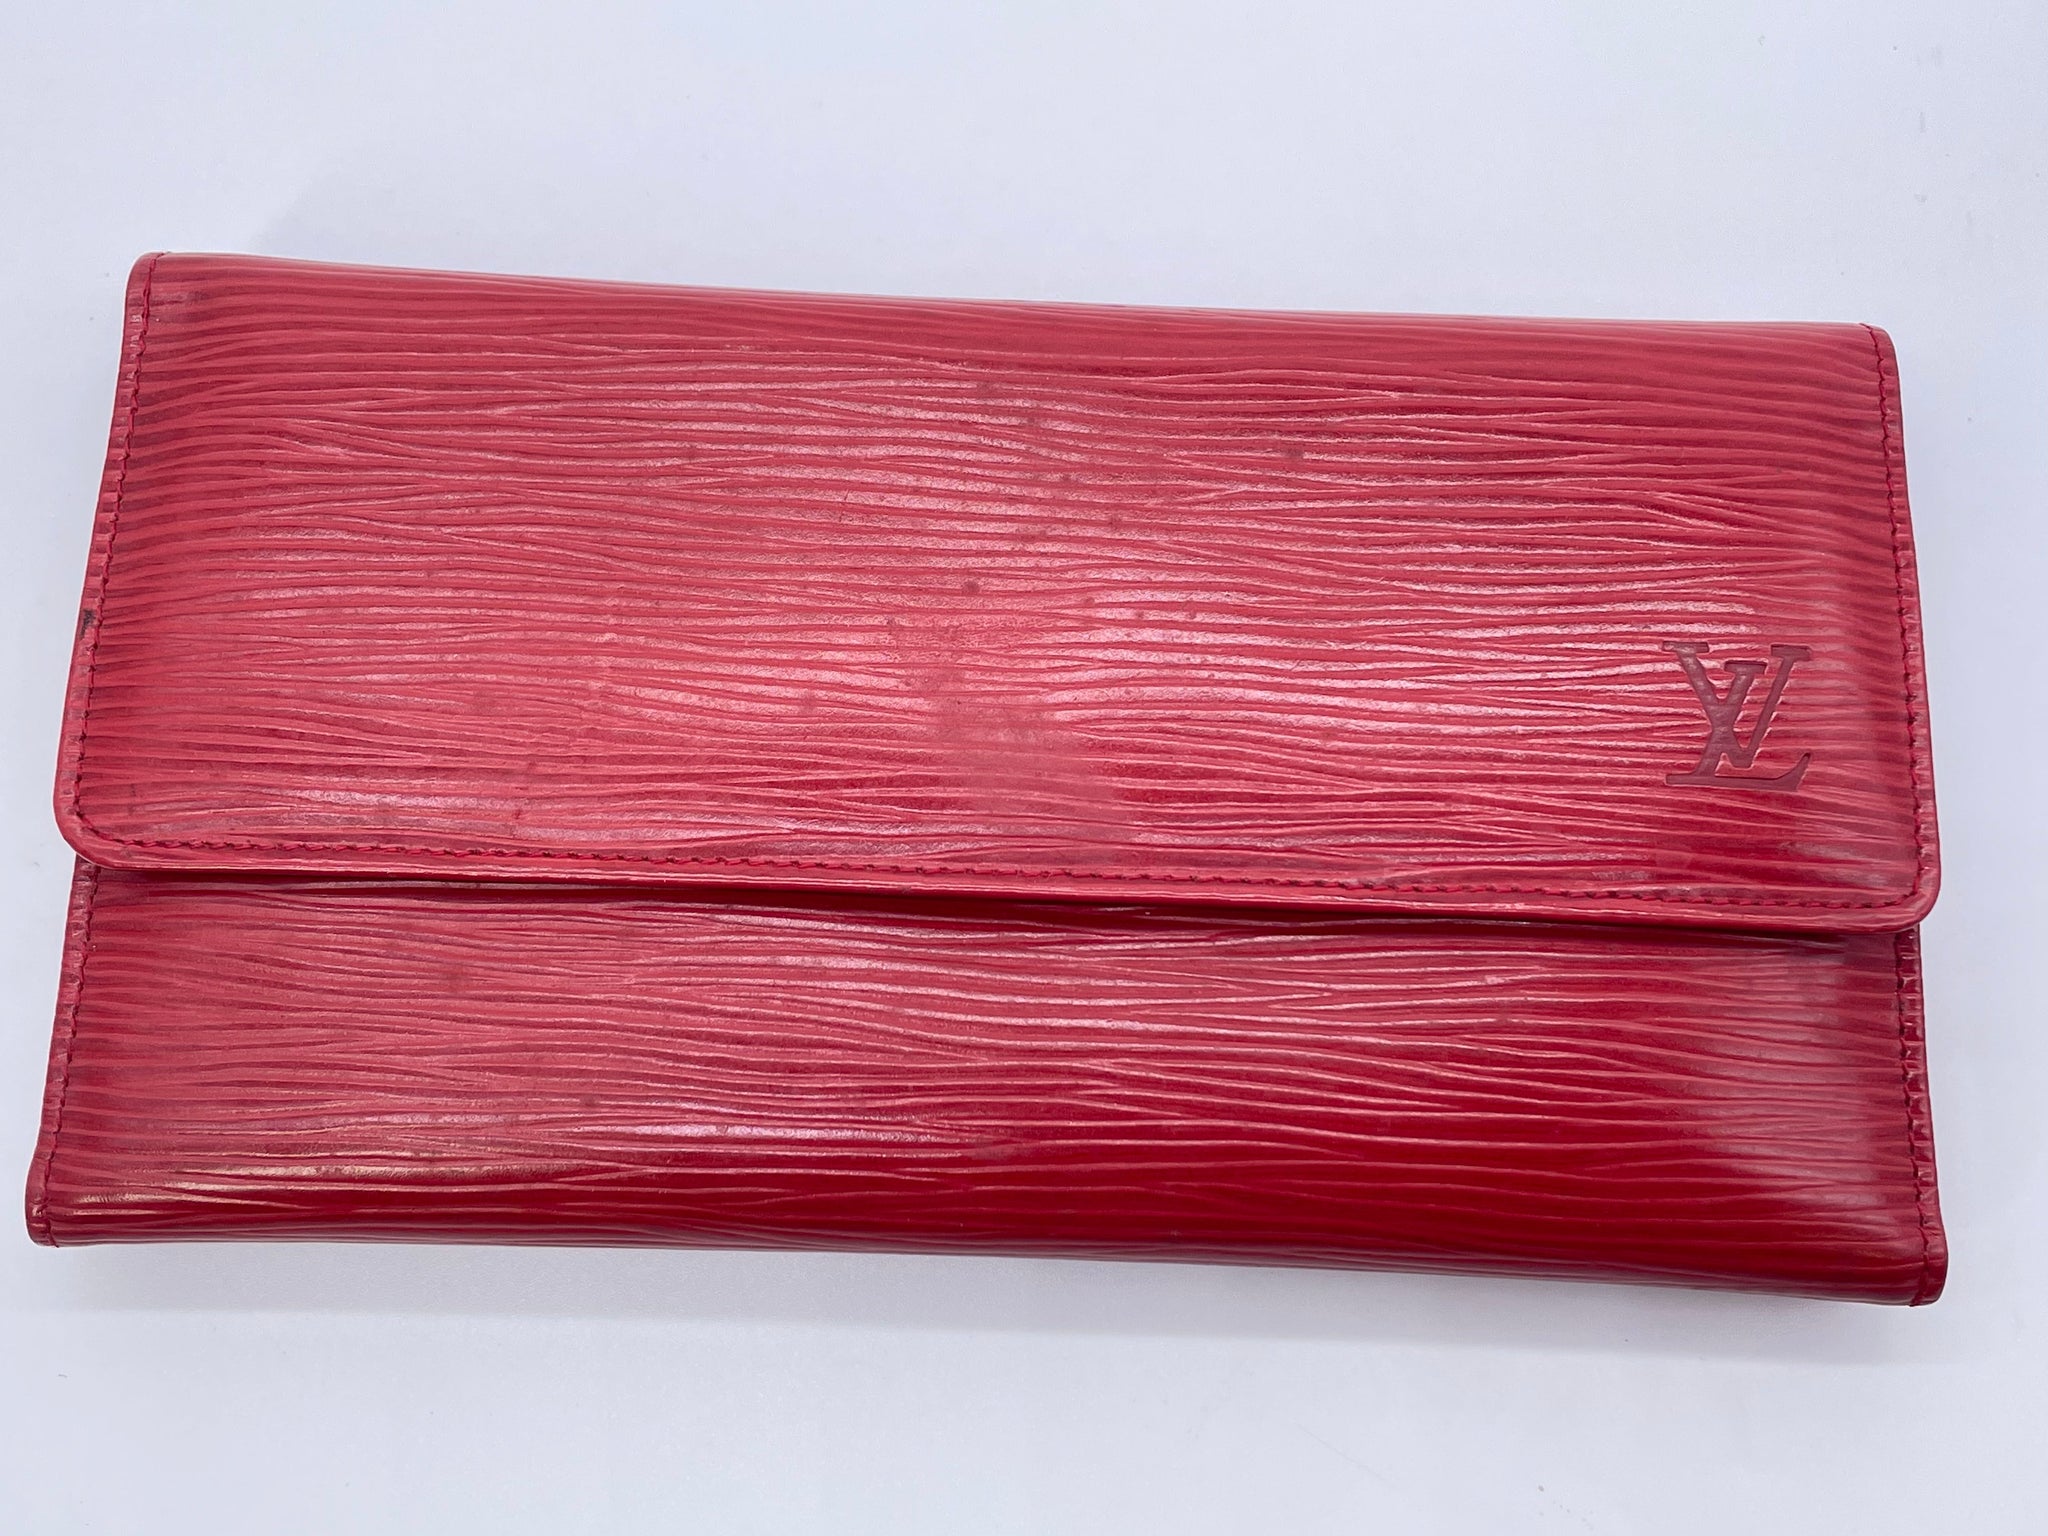 Louis Vuitton Womens Porte Trésor International Trifold Wallet